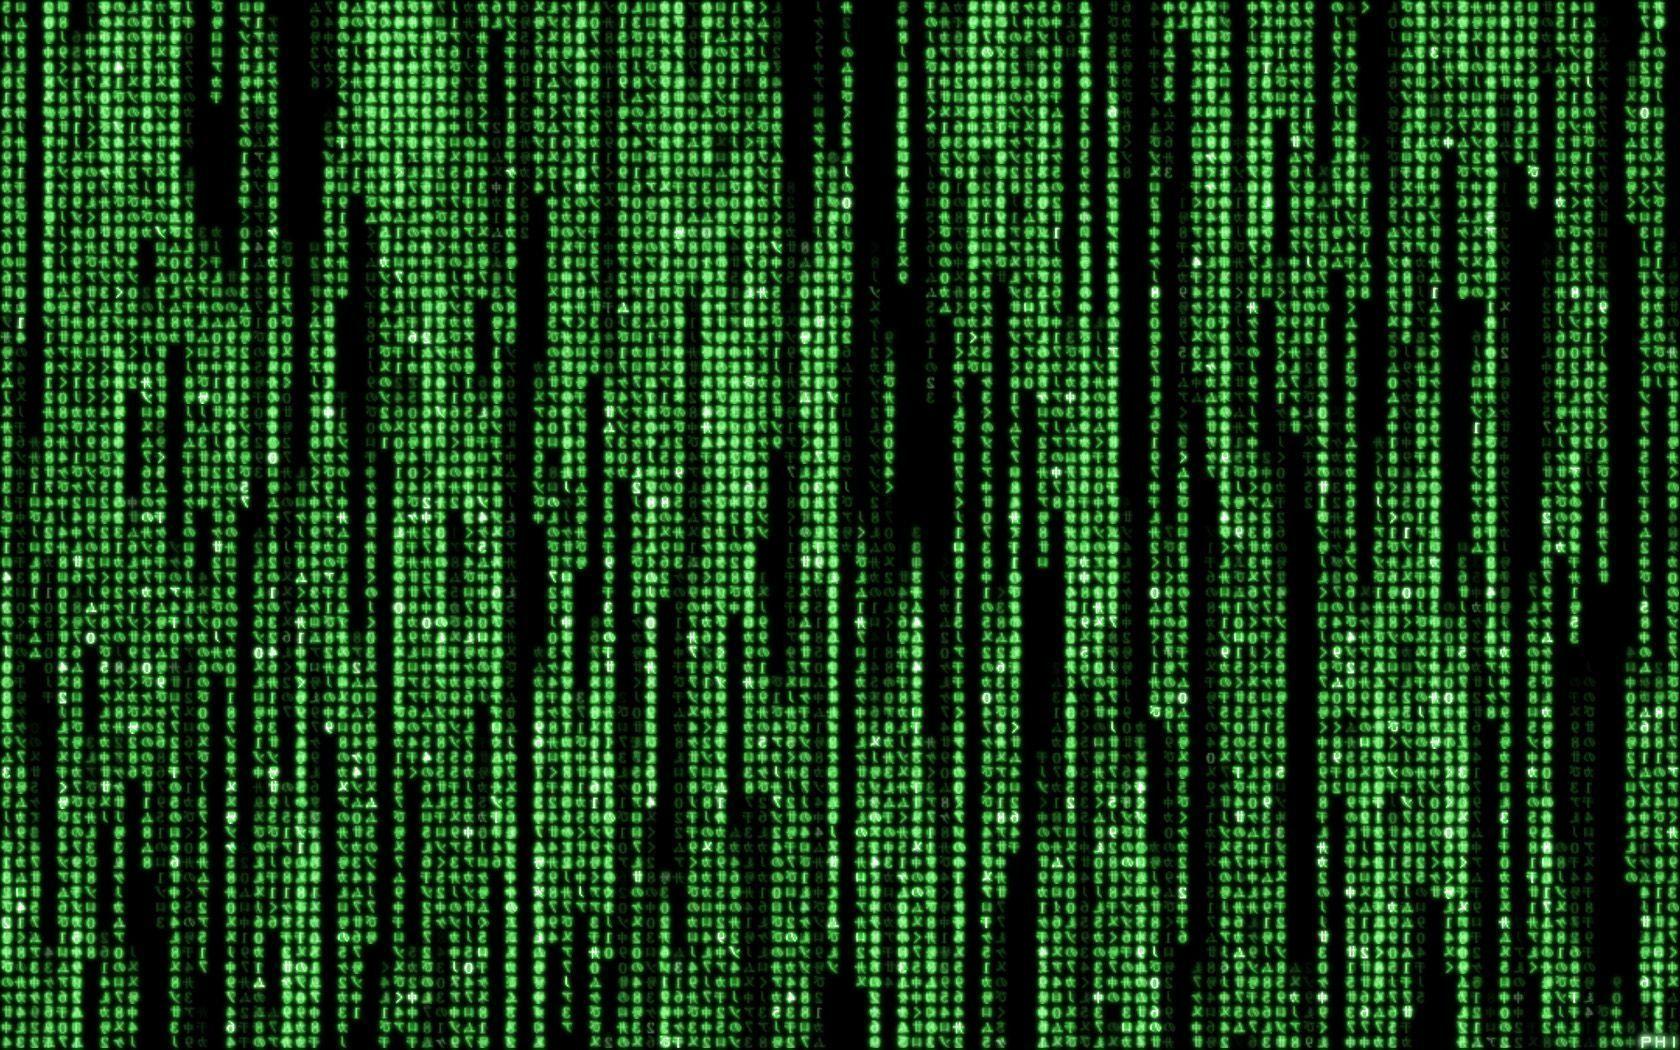 Matrix_code_by_phi_